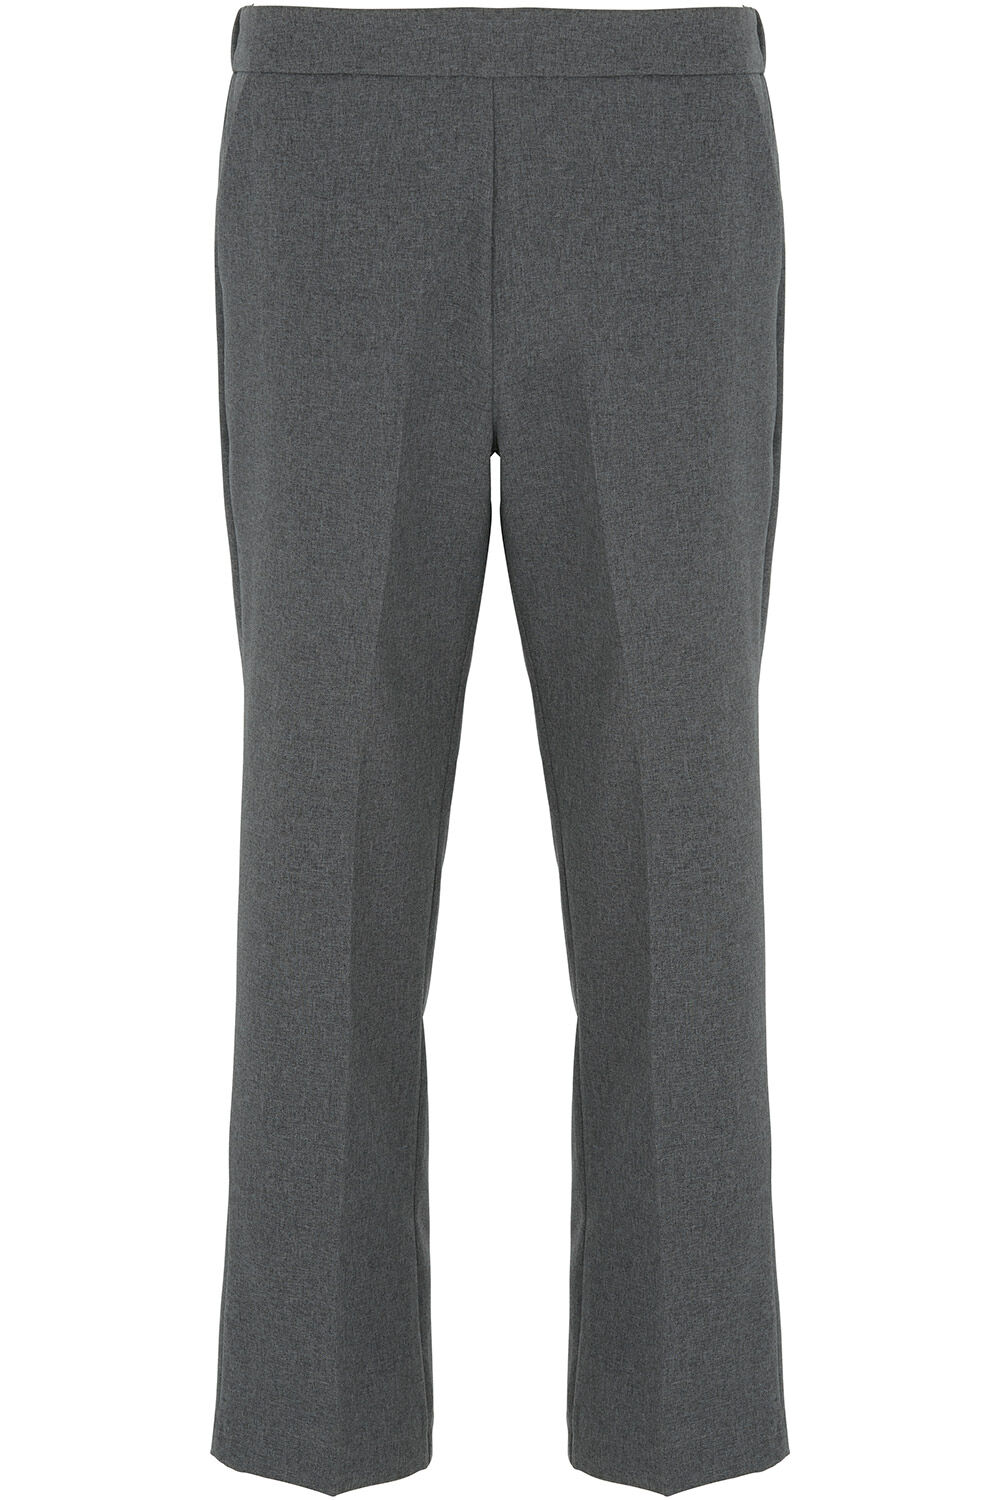 Bonmarche Straight Leg Pull On Trouser - Grey, Size: 10